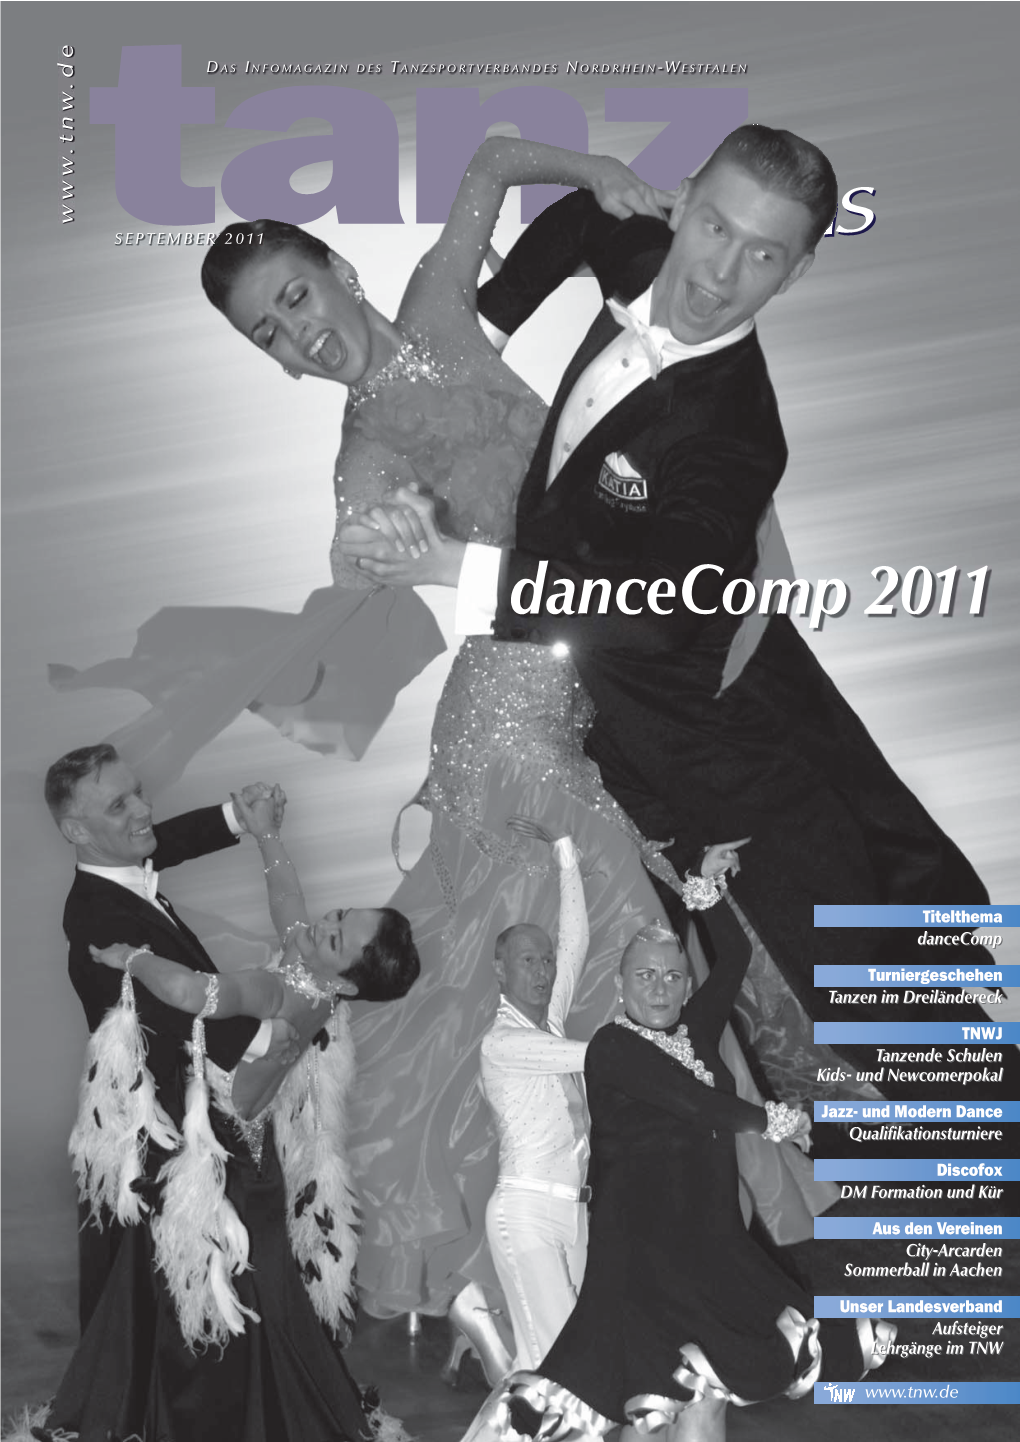 Dancecomp 2011